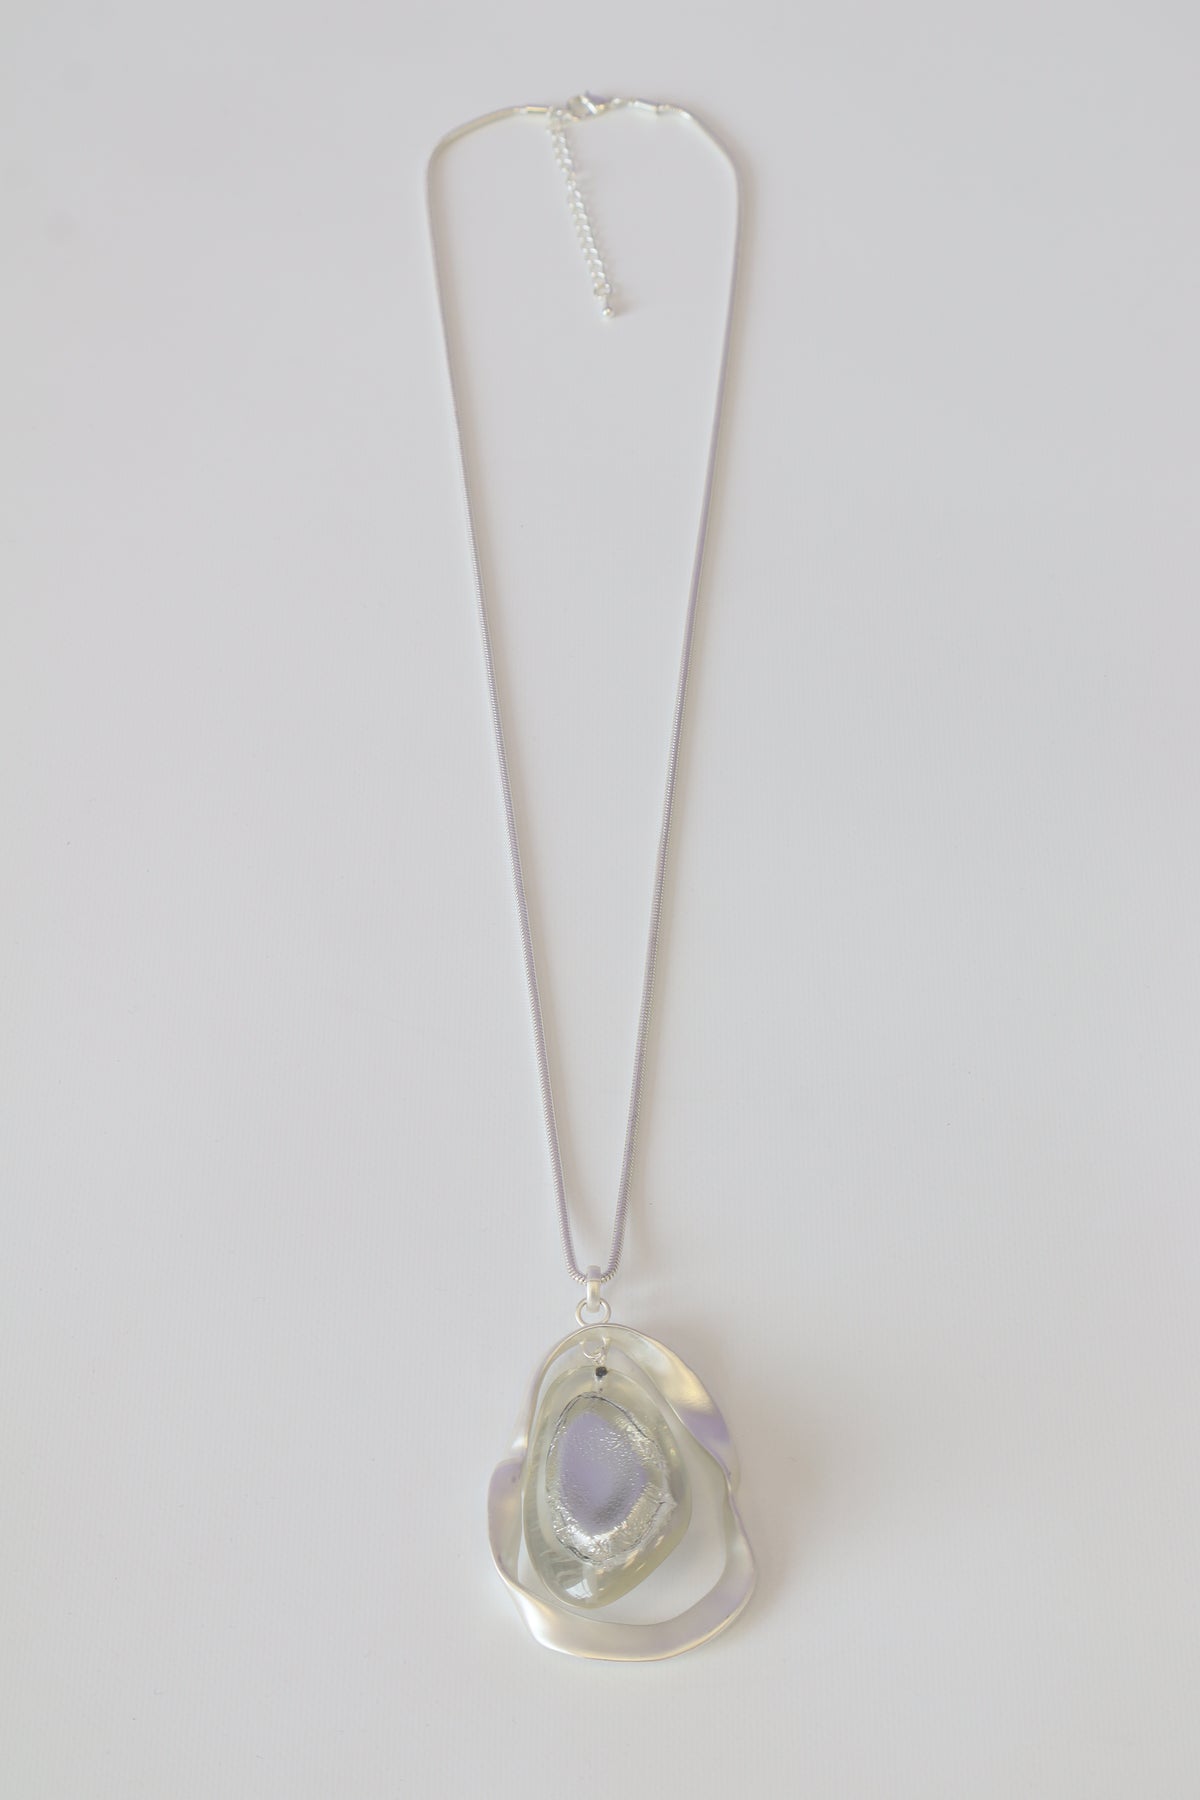 Yara Necklace in Silver